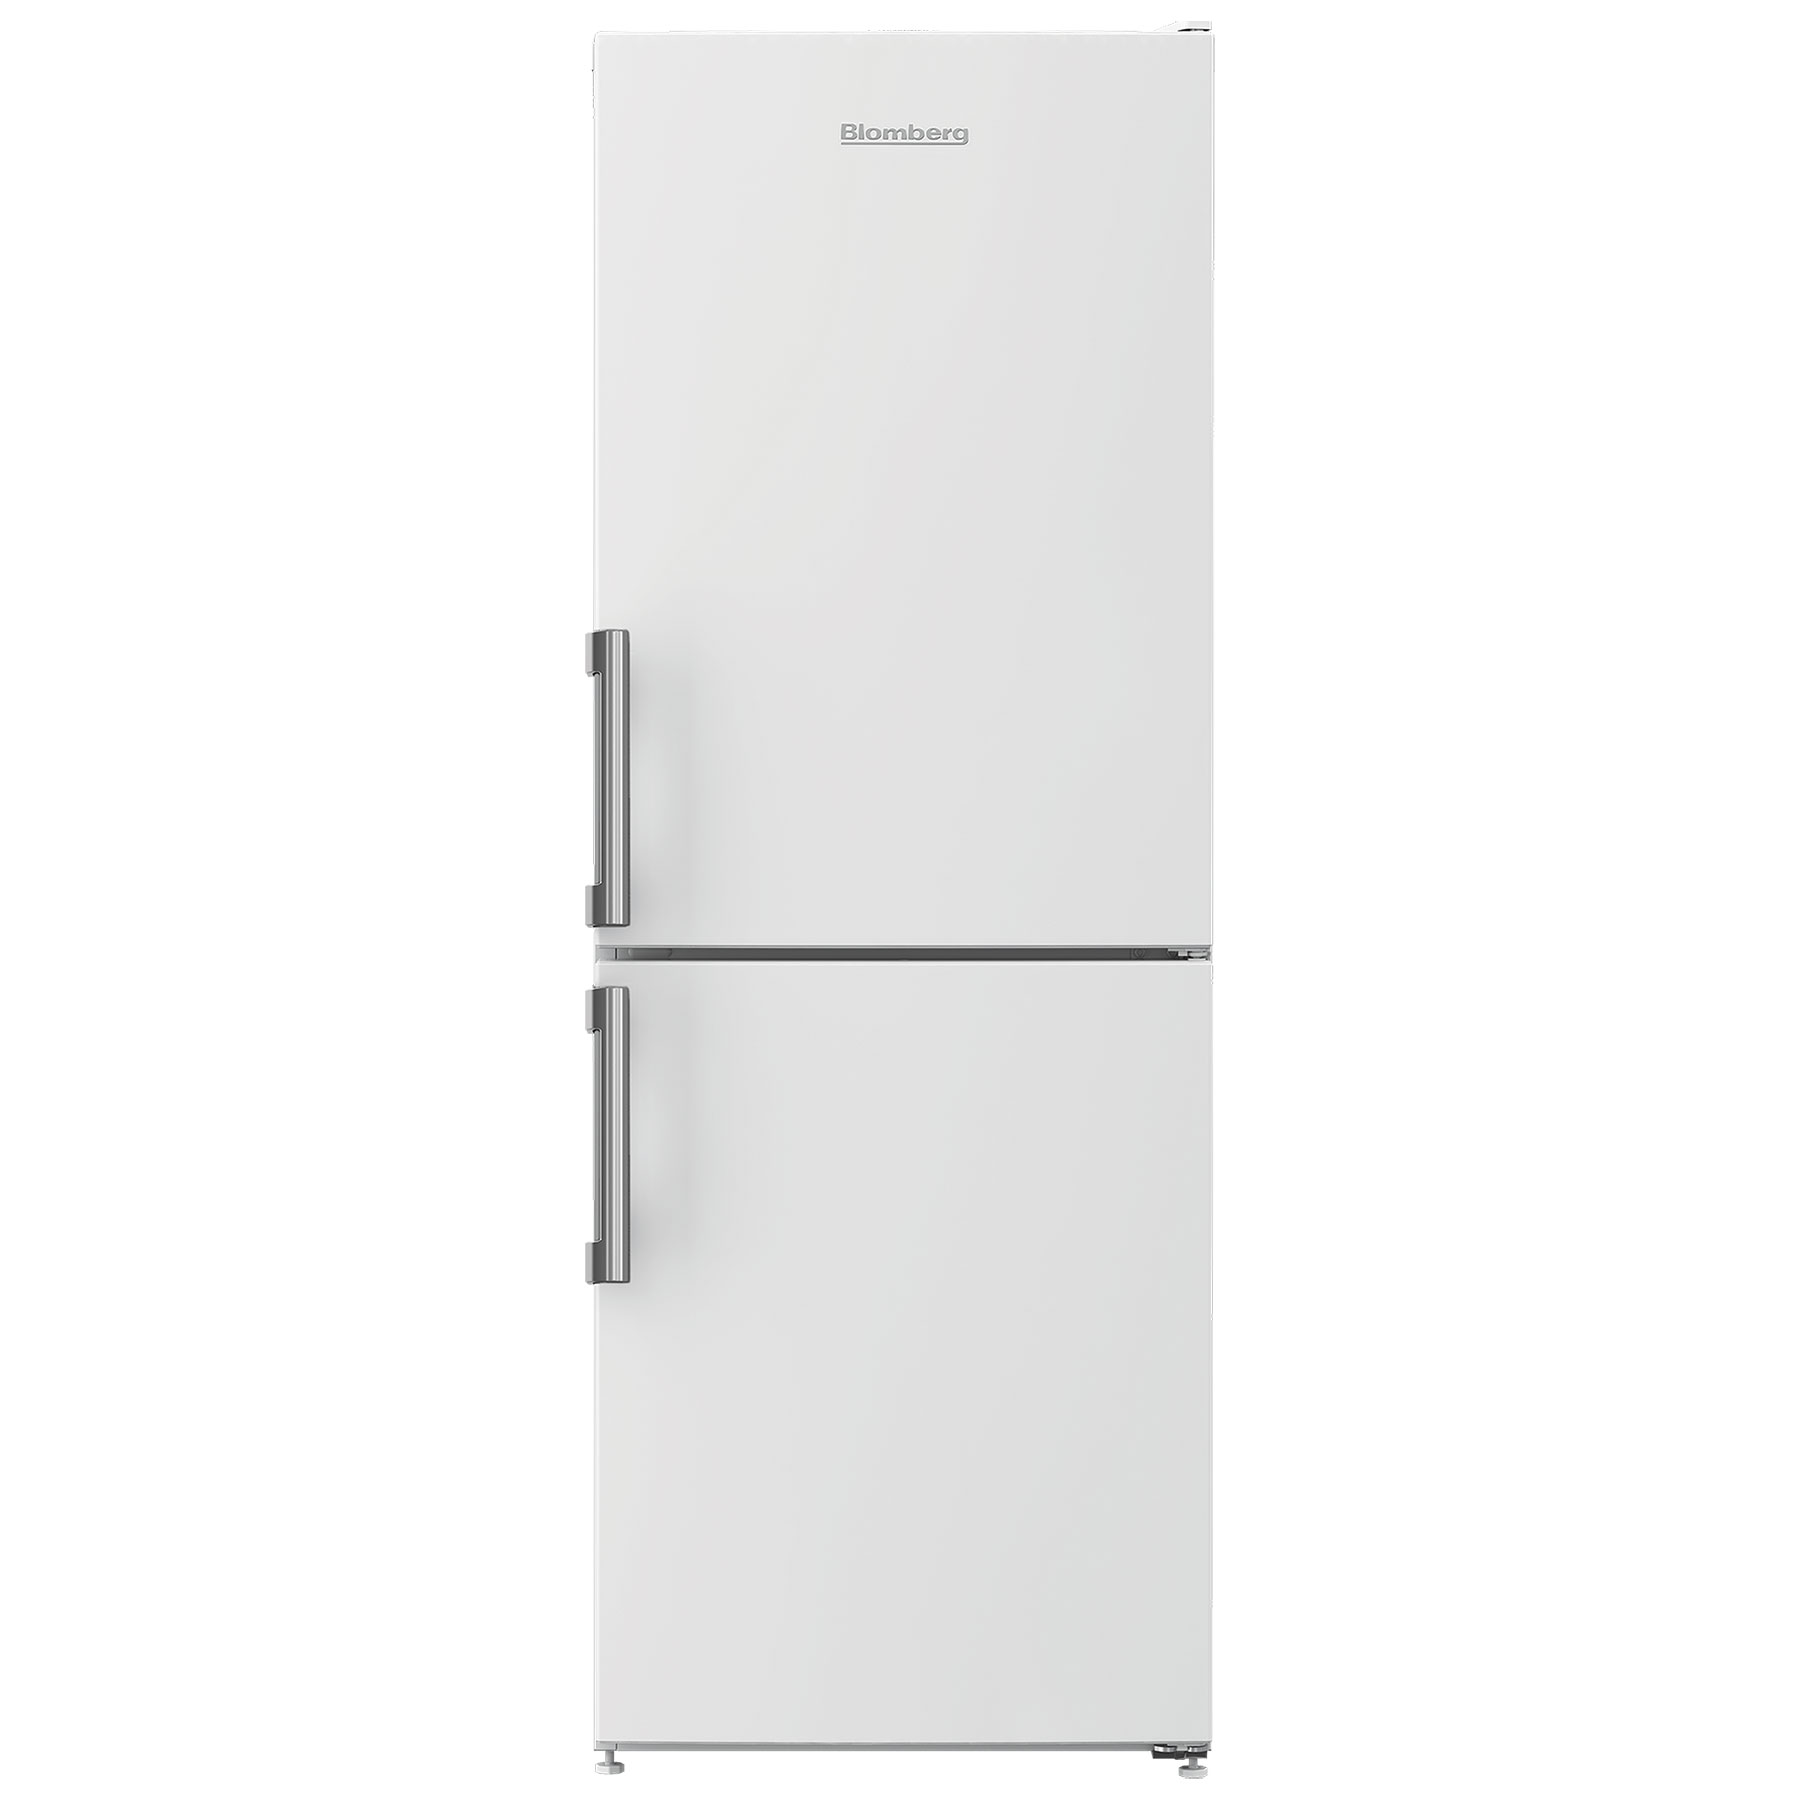 Image of Blomberg KGM4524 54cm Frost Free Fridge Freezer in White 1 53m E